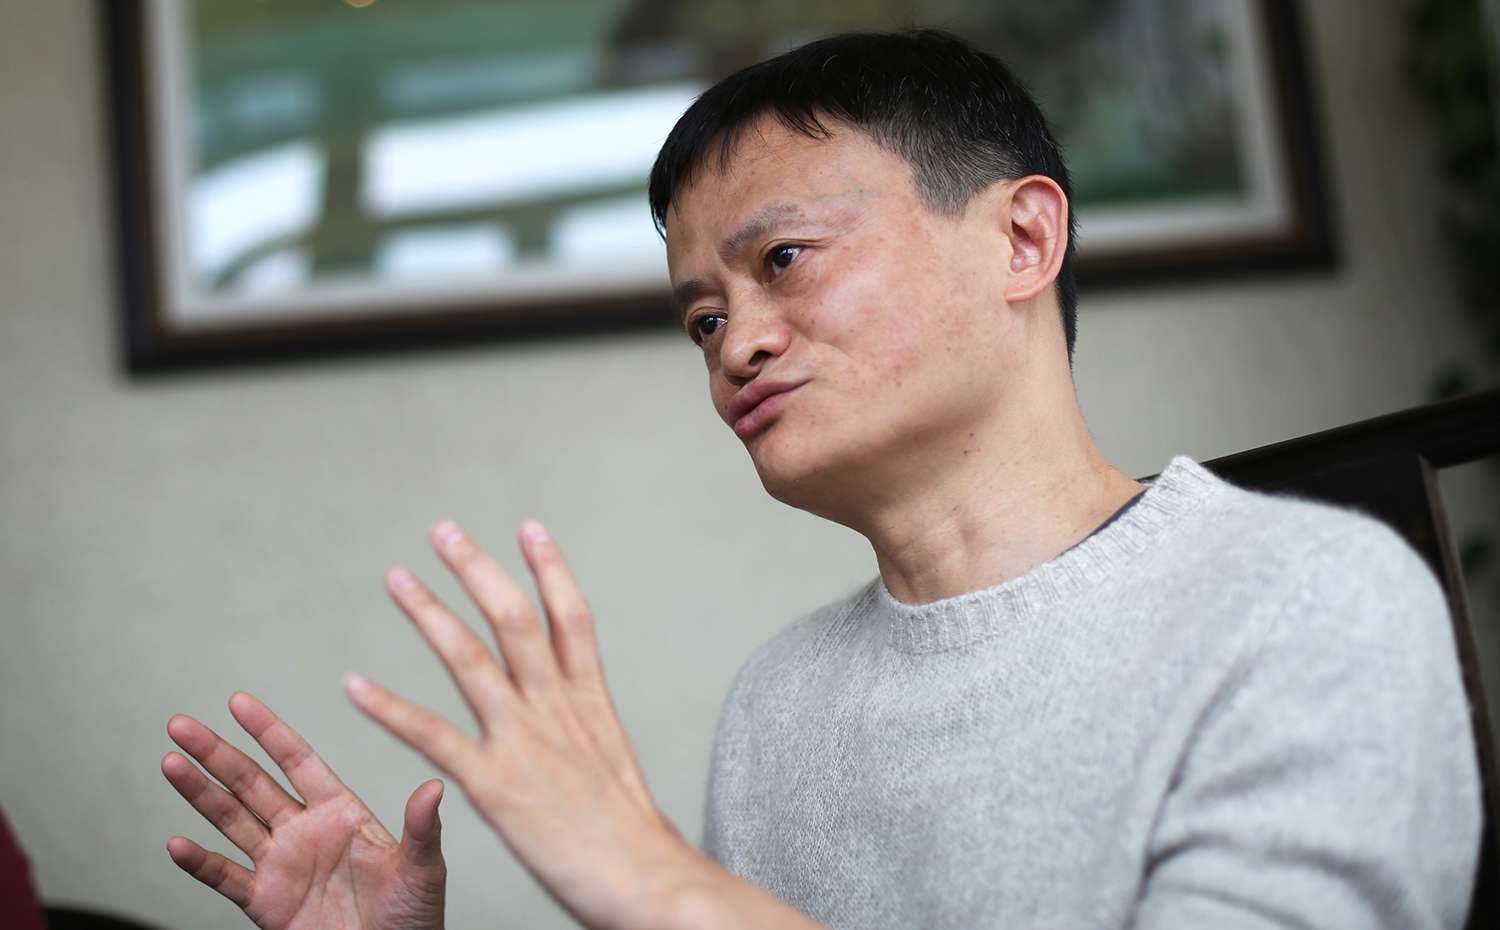 China still has huge potential waiting to be tapped, says Alibaba founder Jack Ma. Photo: Sam Tsang